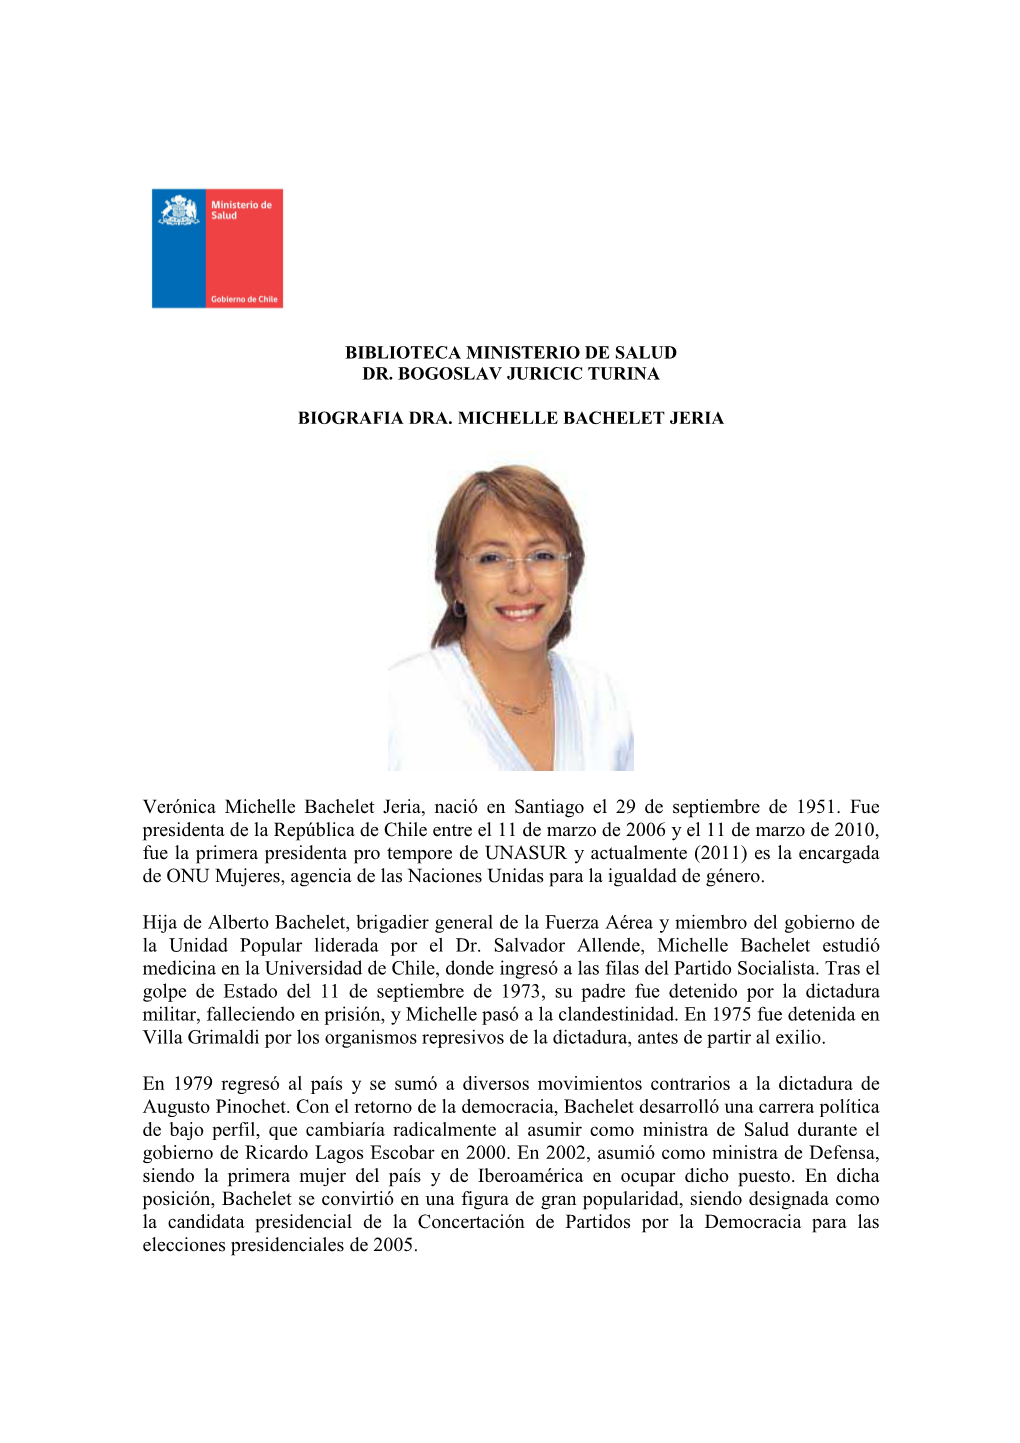 Biografía Dra. Michelle Bachelet Jeria